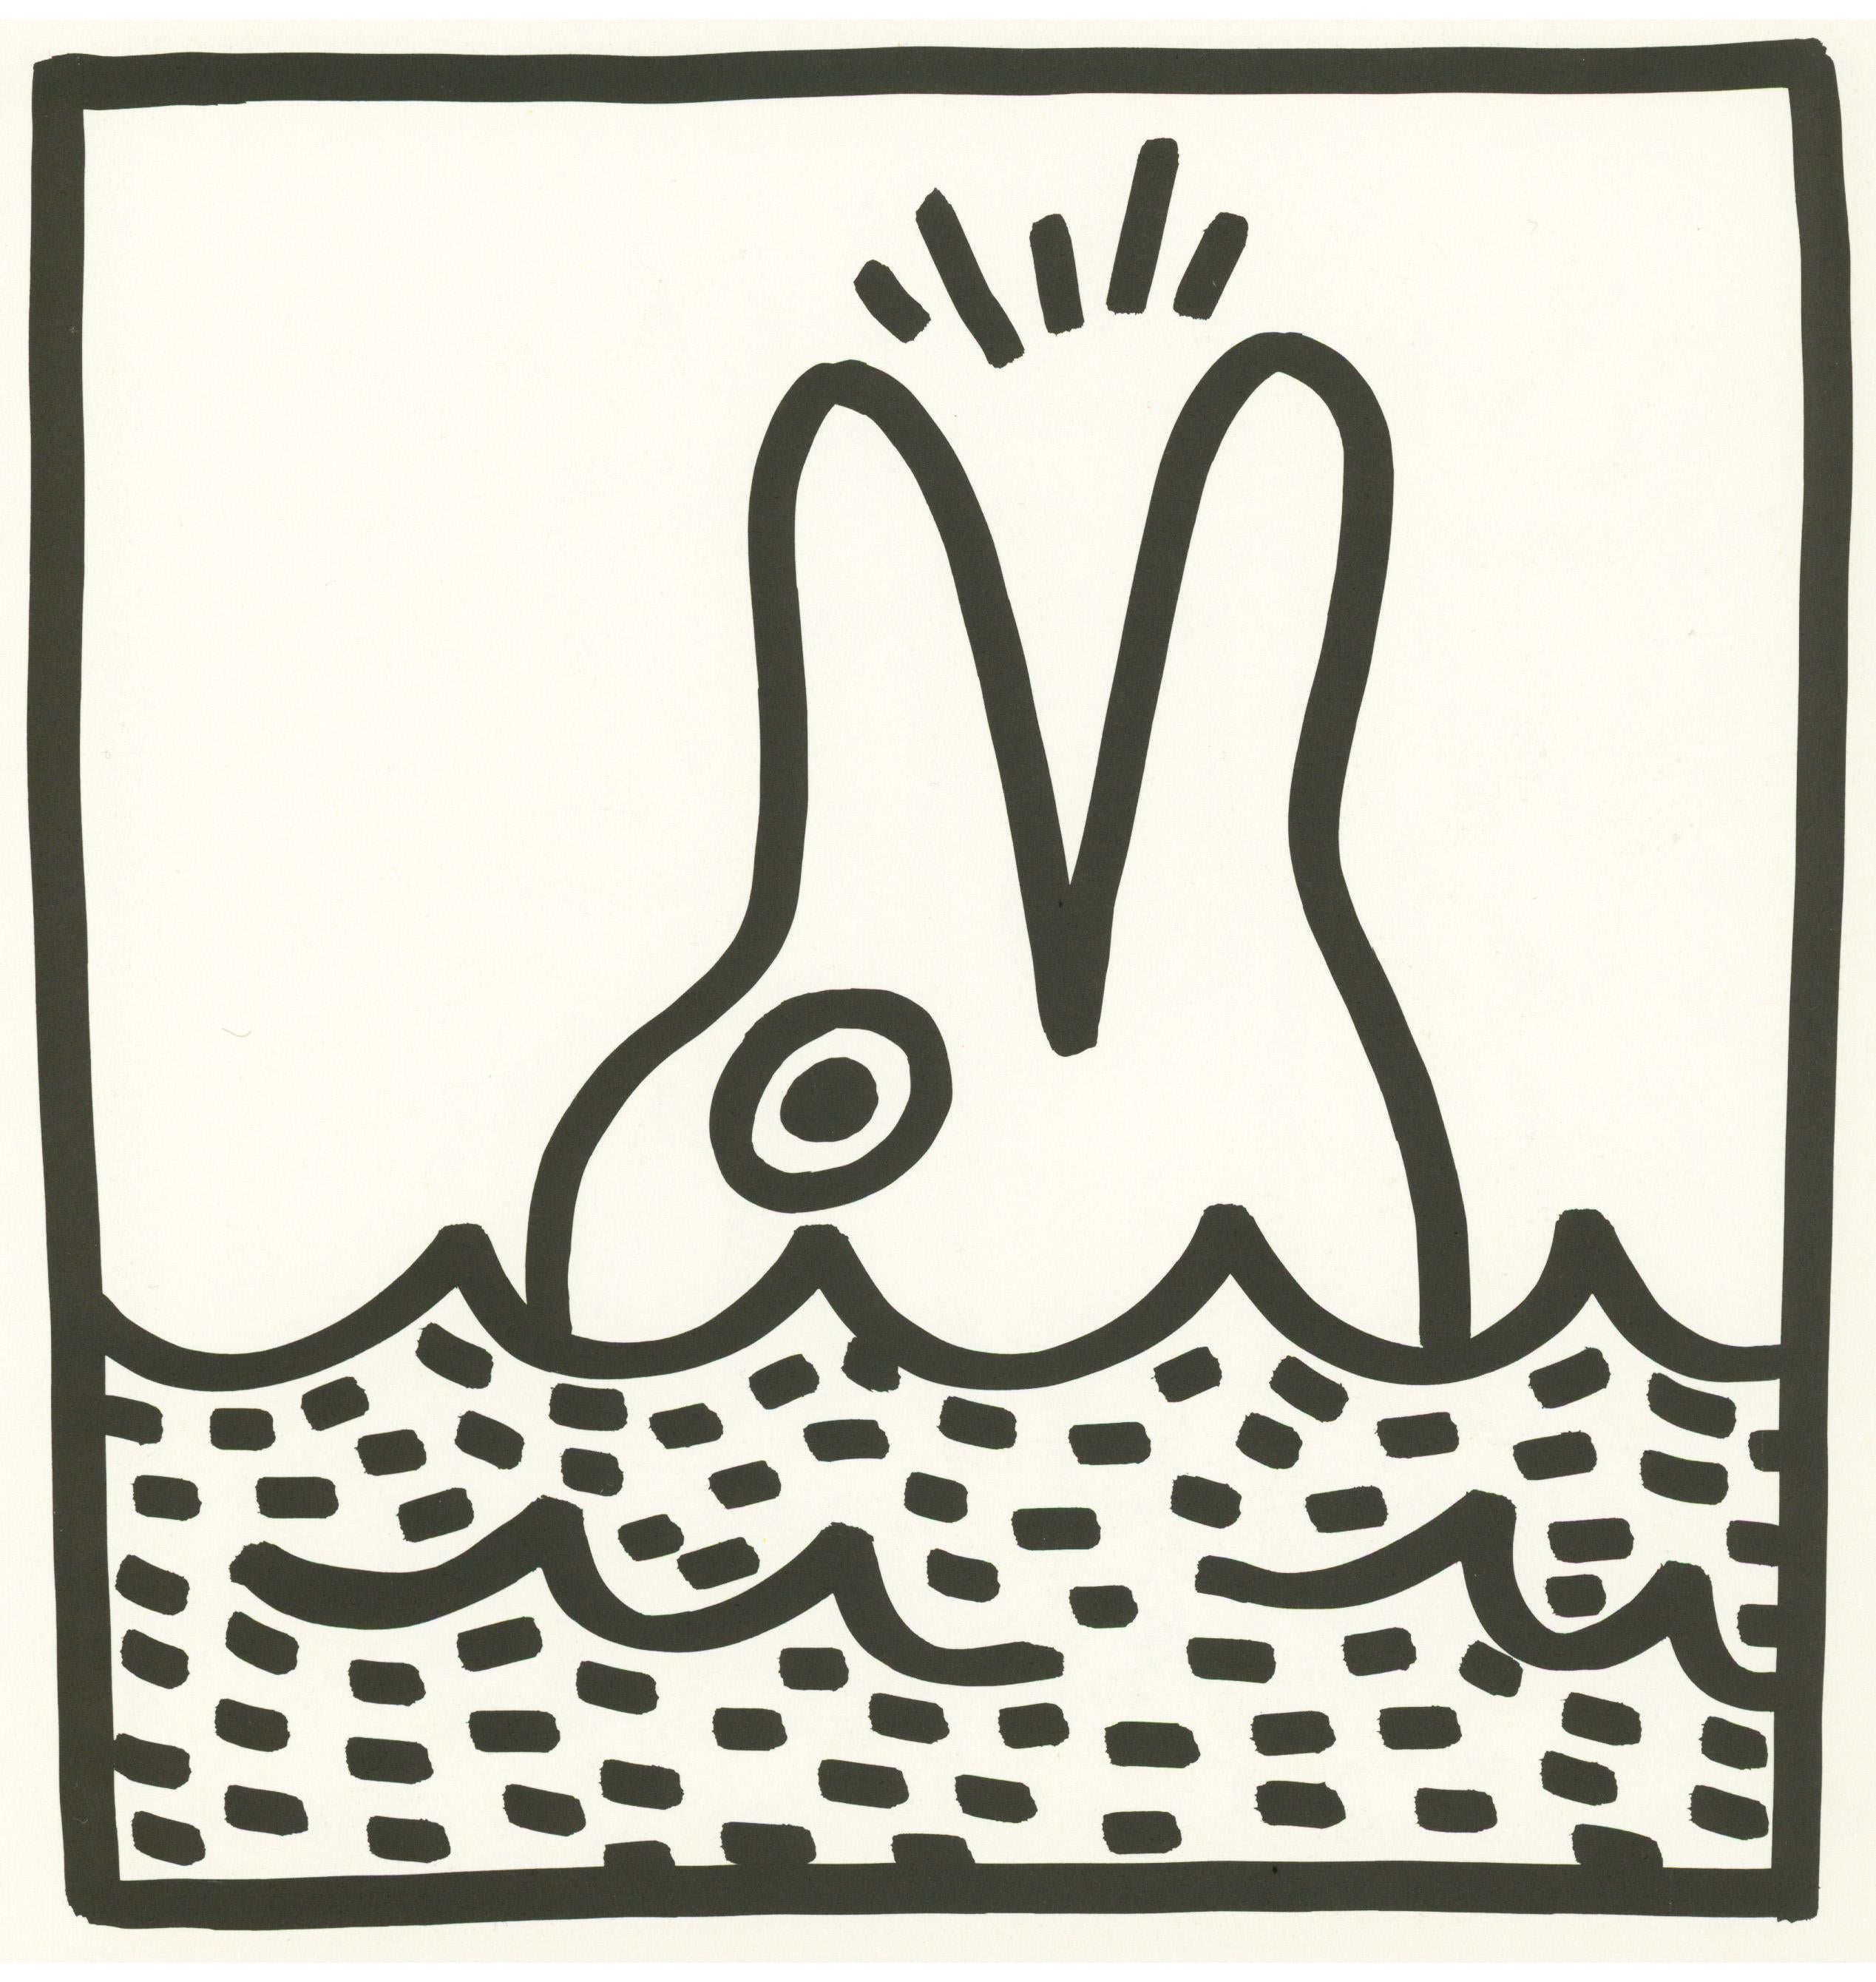 (after) Keith Haring Animal Print - Keith Haring Dolphin lithograph 1982 (Keith Haring prints) 